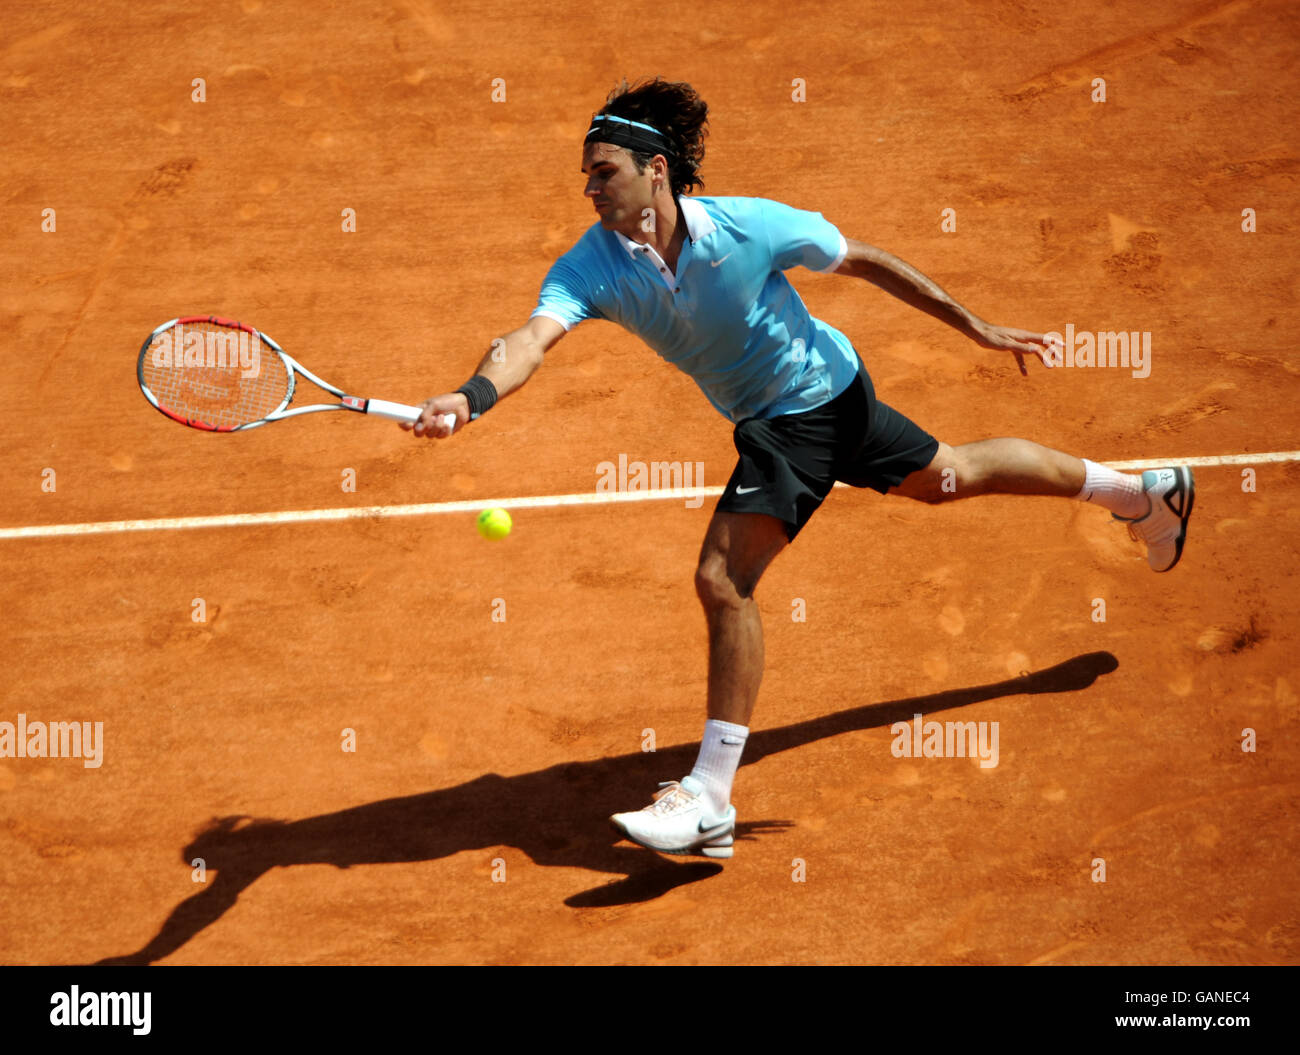 Tennis - ATP Masters Series - Monte Carlo - Roger Federer / Gael Monfils. Roger Federer Stockfoto